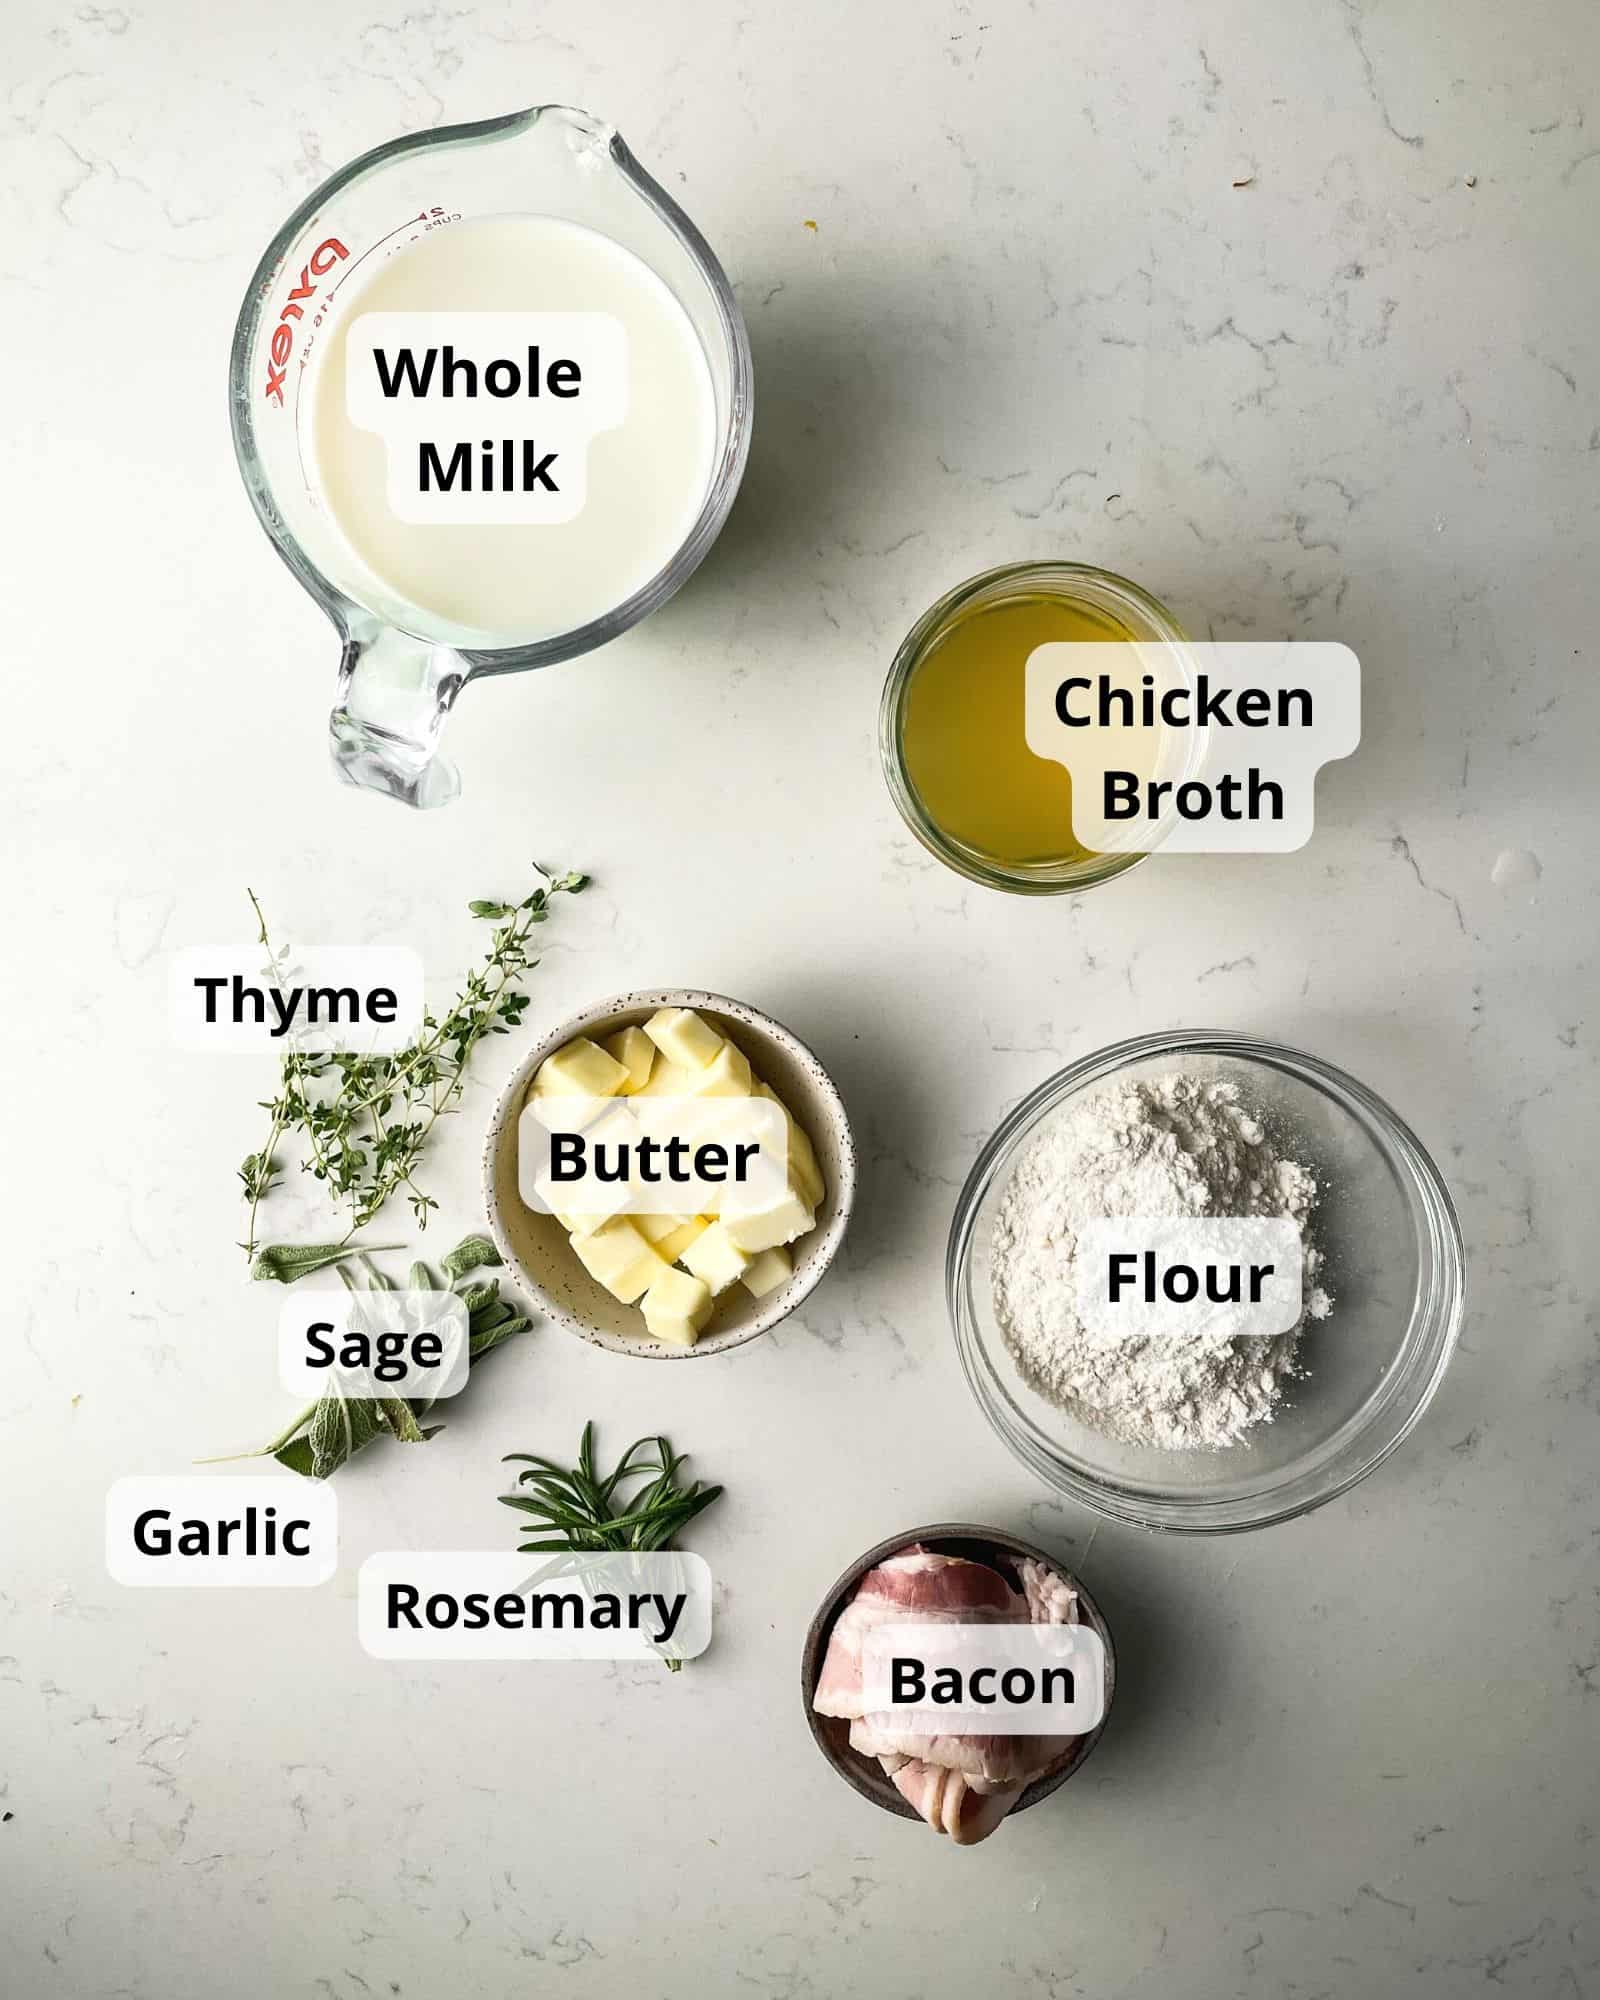 ingredients to make white pepper gravy - bacon, flour, chicken broth, milk, fresh herbs, and butter.